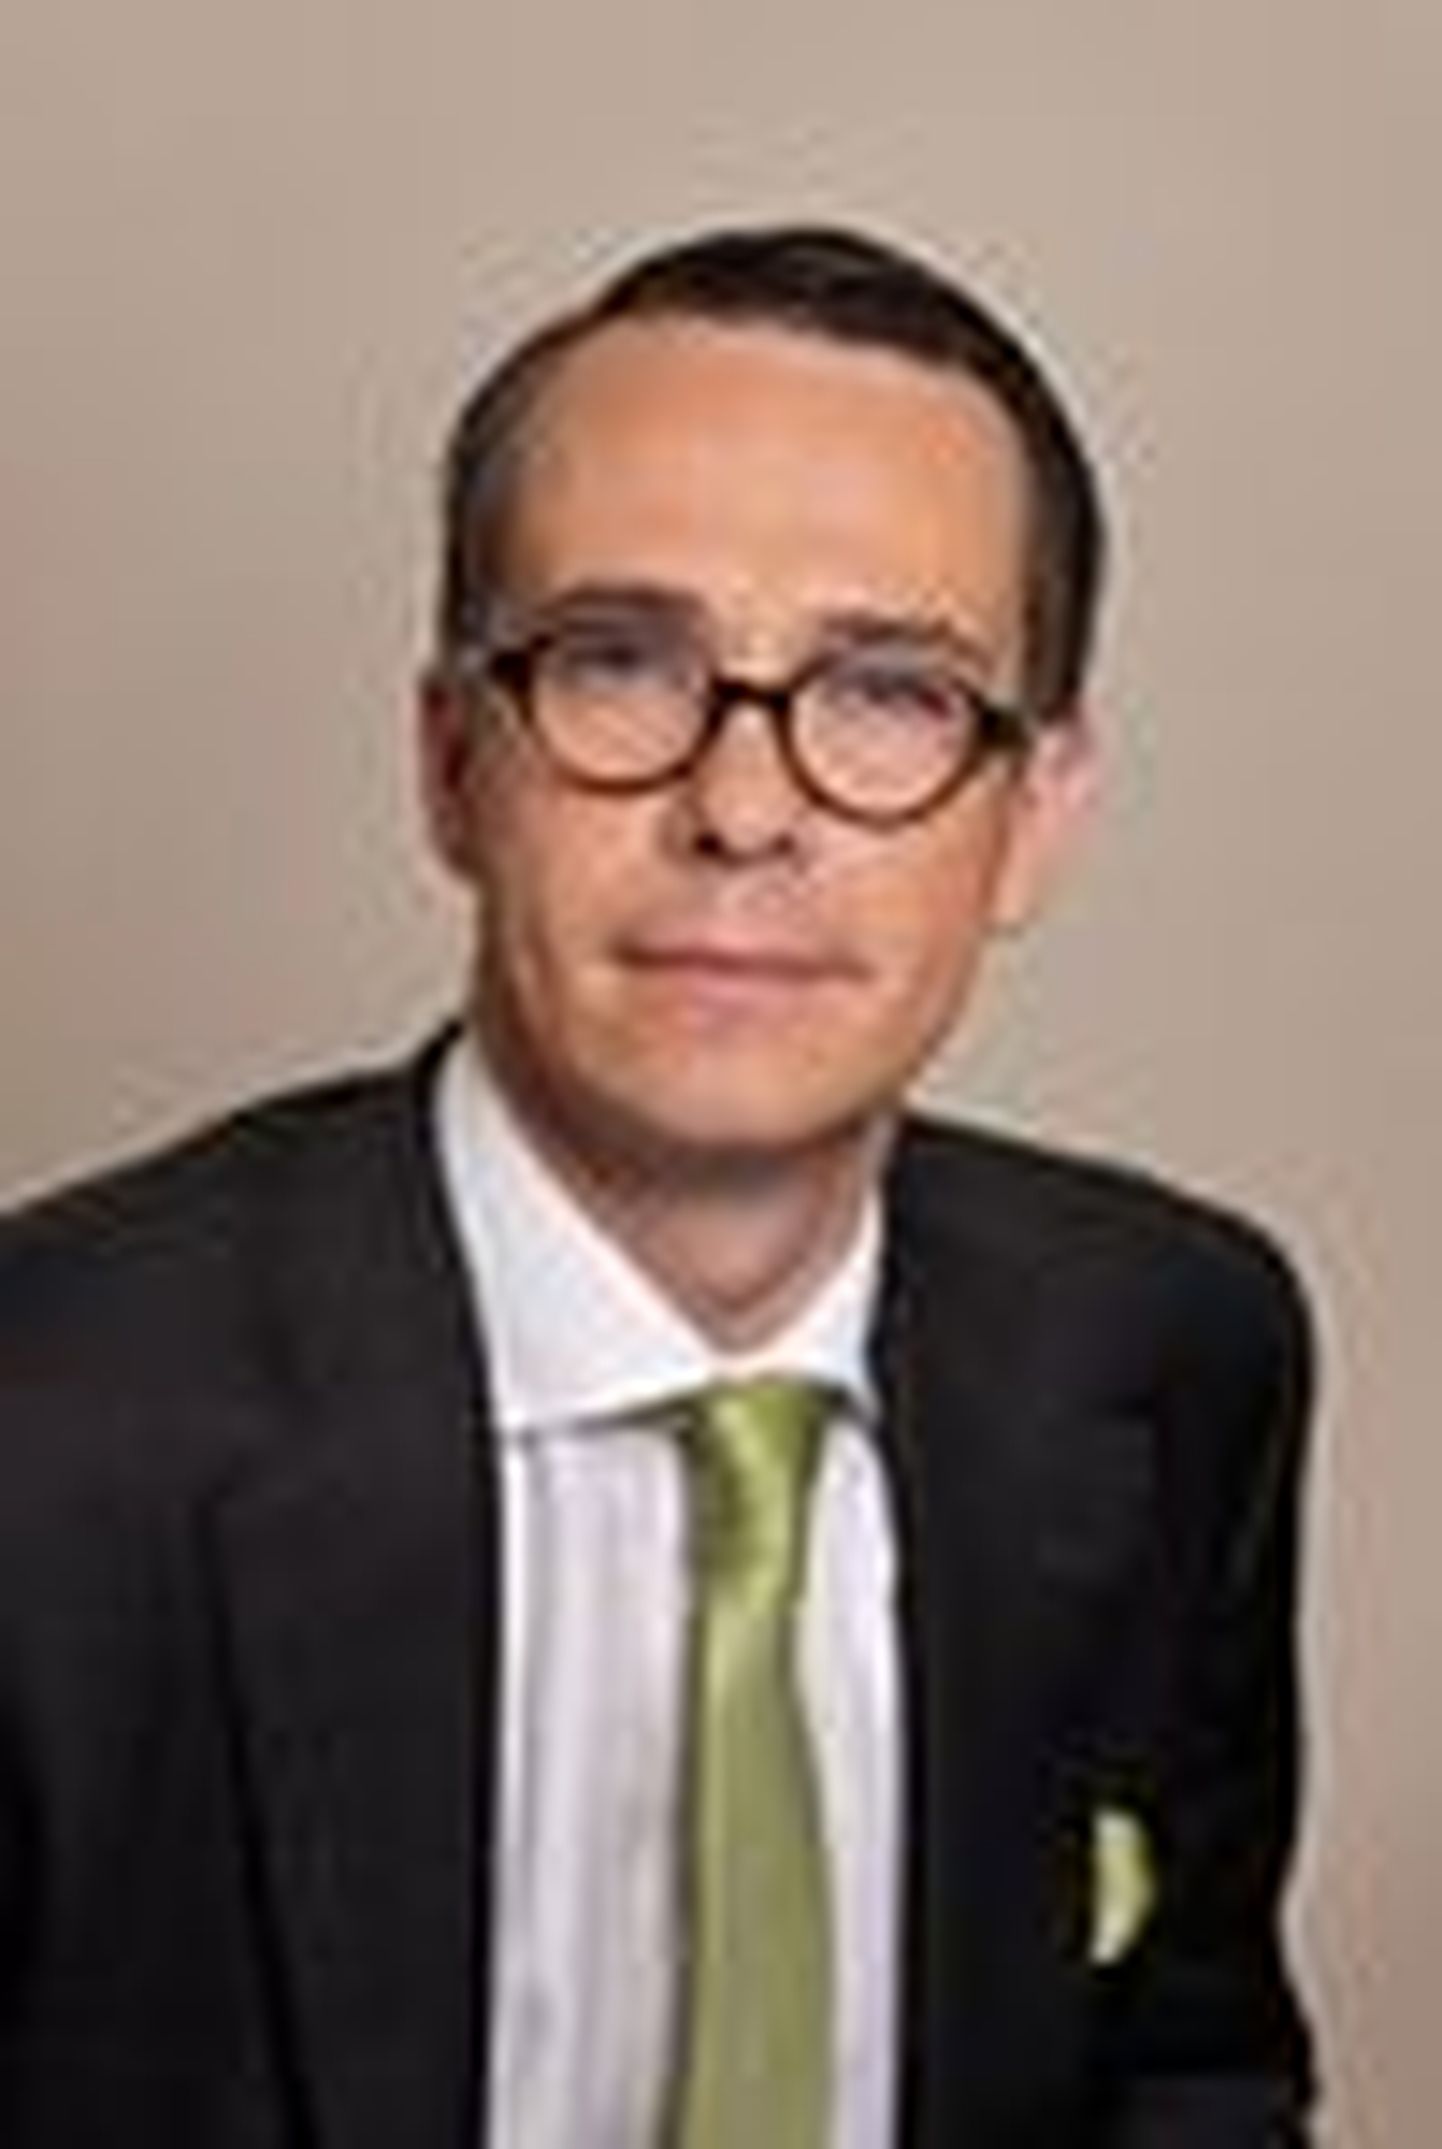 Soome kaitseminister Carl Haglund